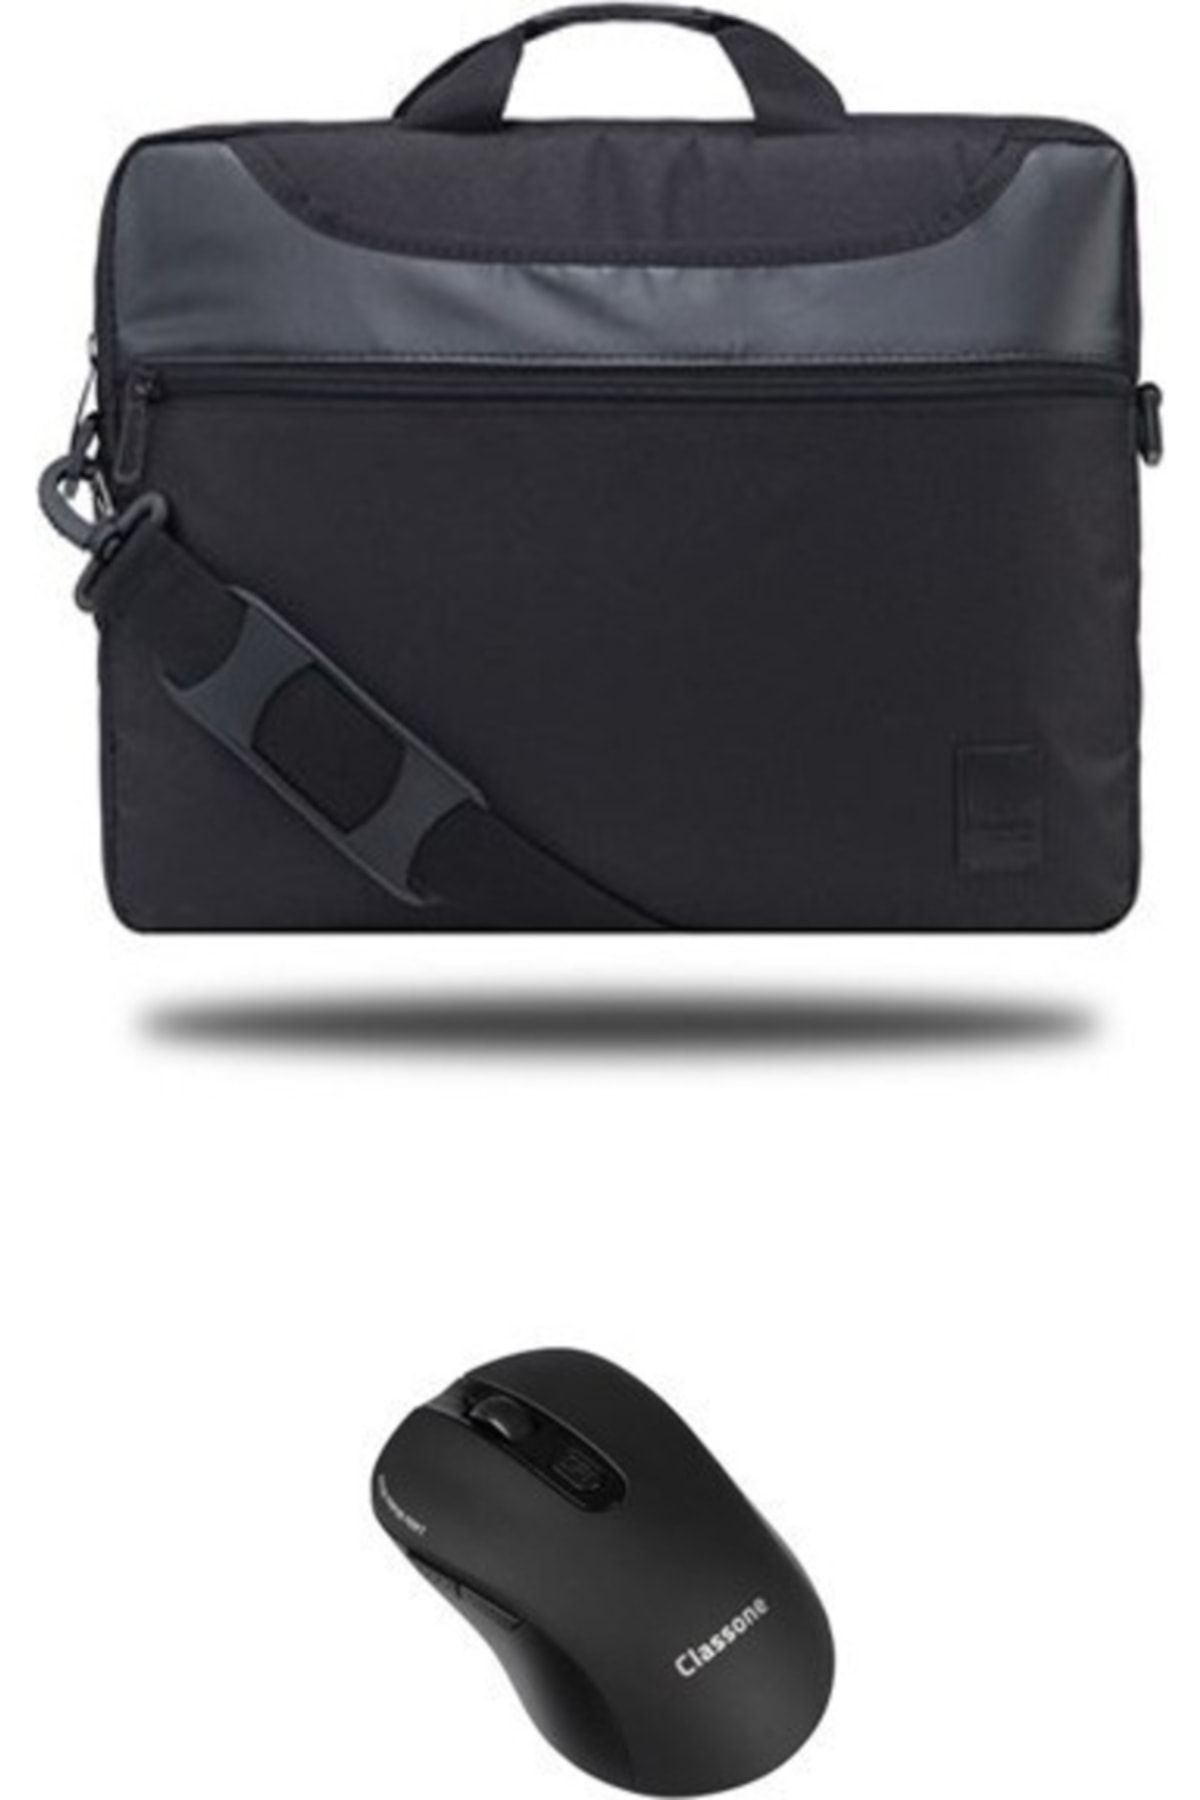 Classone Workstation Bnd400 15.6 “macbook,laptop,çantası-siyah + Kablosuz Mouse